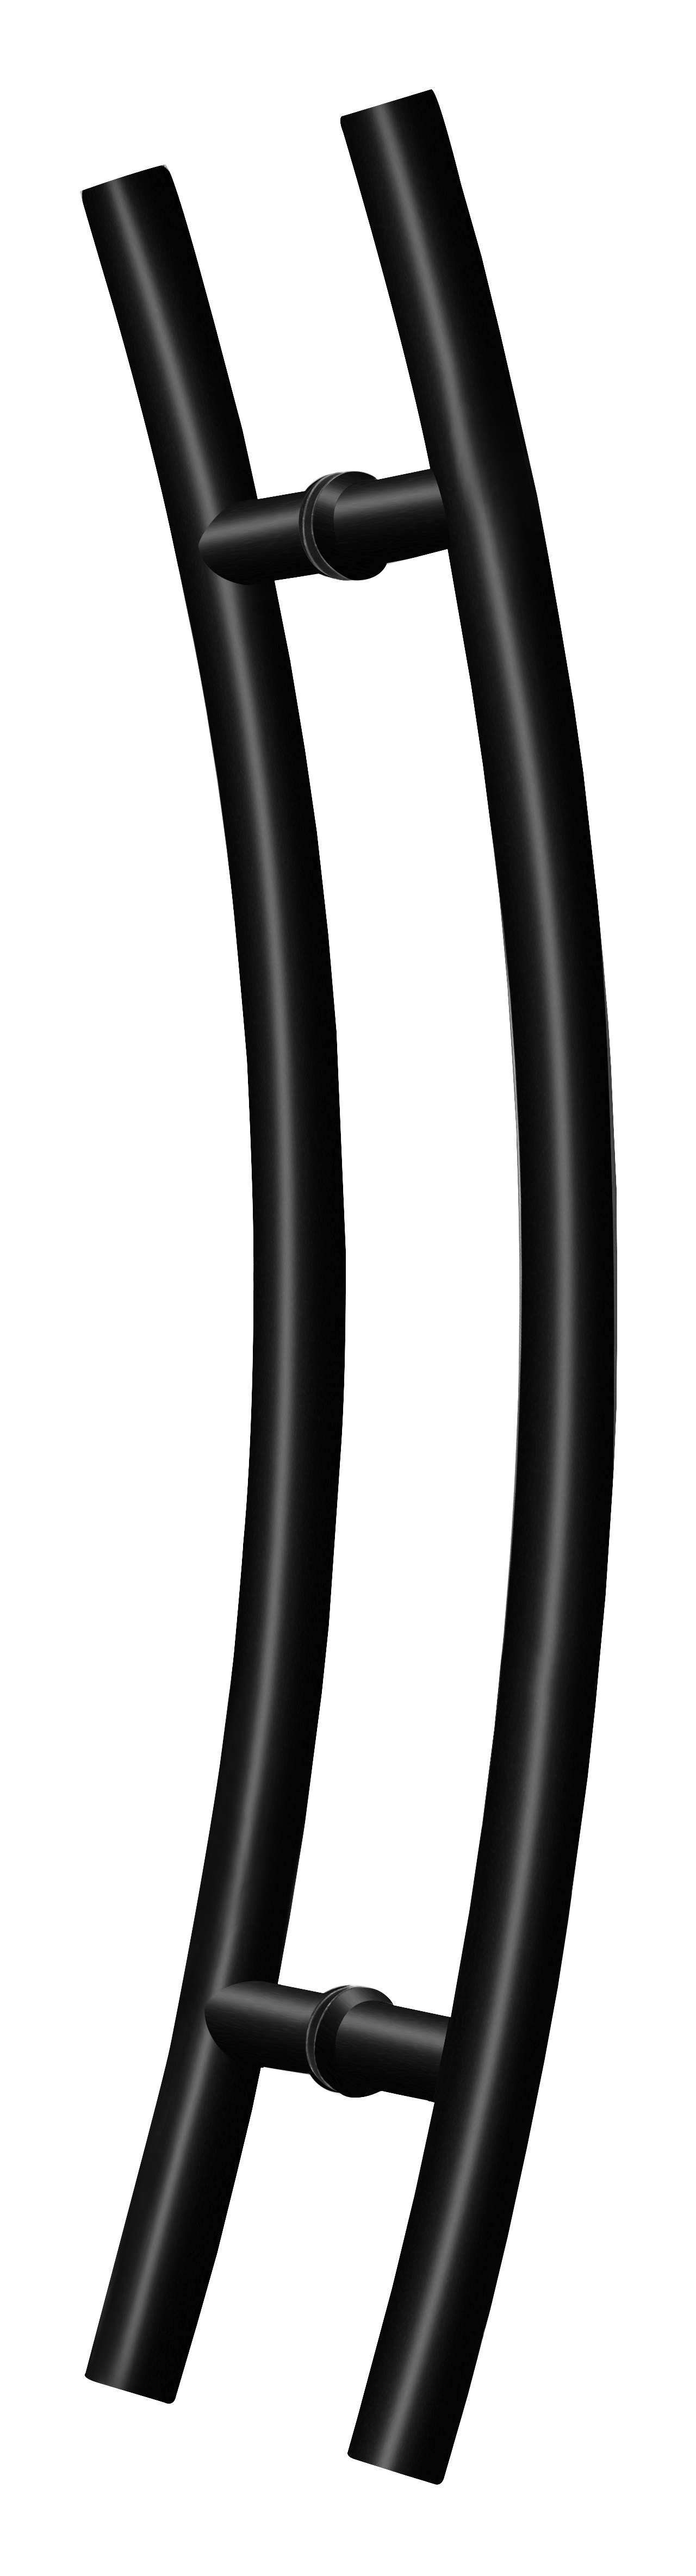 Puxador-aco-duplo-para-porta-preto-60cm-Prostell-1744526